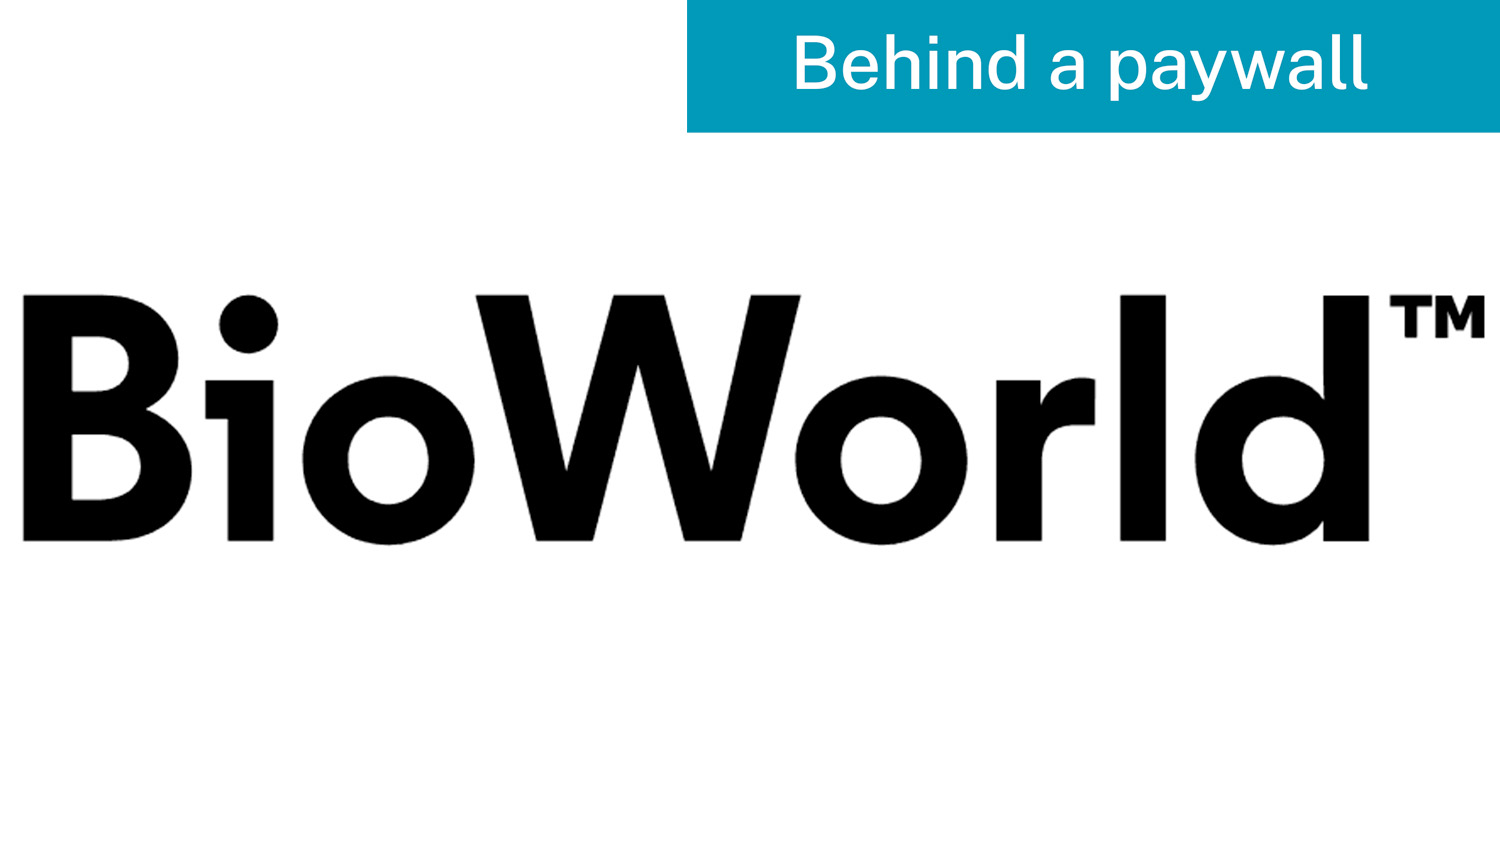 images/inthenews/Behind a paywall/bioworld-logo-vector.jpg